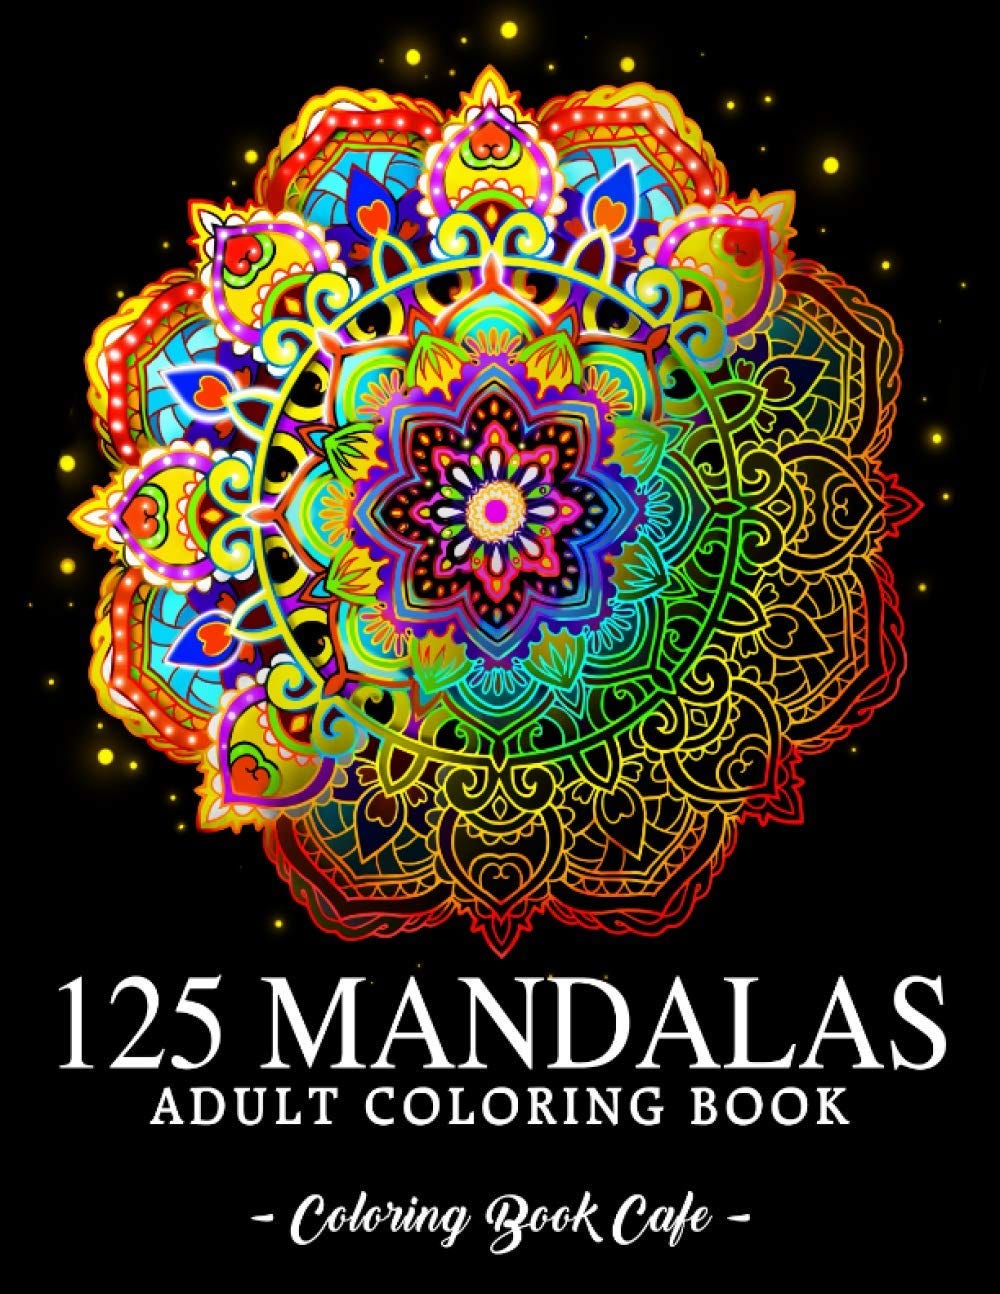 100 Mandalas Adult Coloring Book Mandala Pattern: (Volume-3) Mandala  Coloring Book Stress Relieving Designs featuring 100 AMAZING Mandala  Pattern Colo (Paperback)